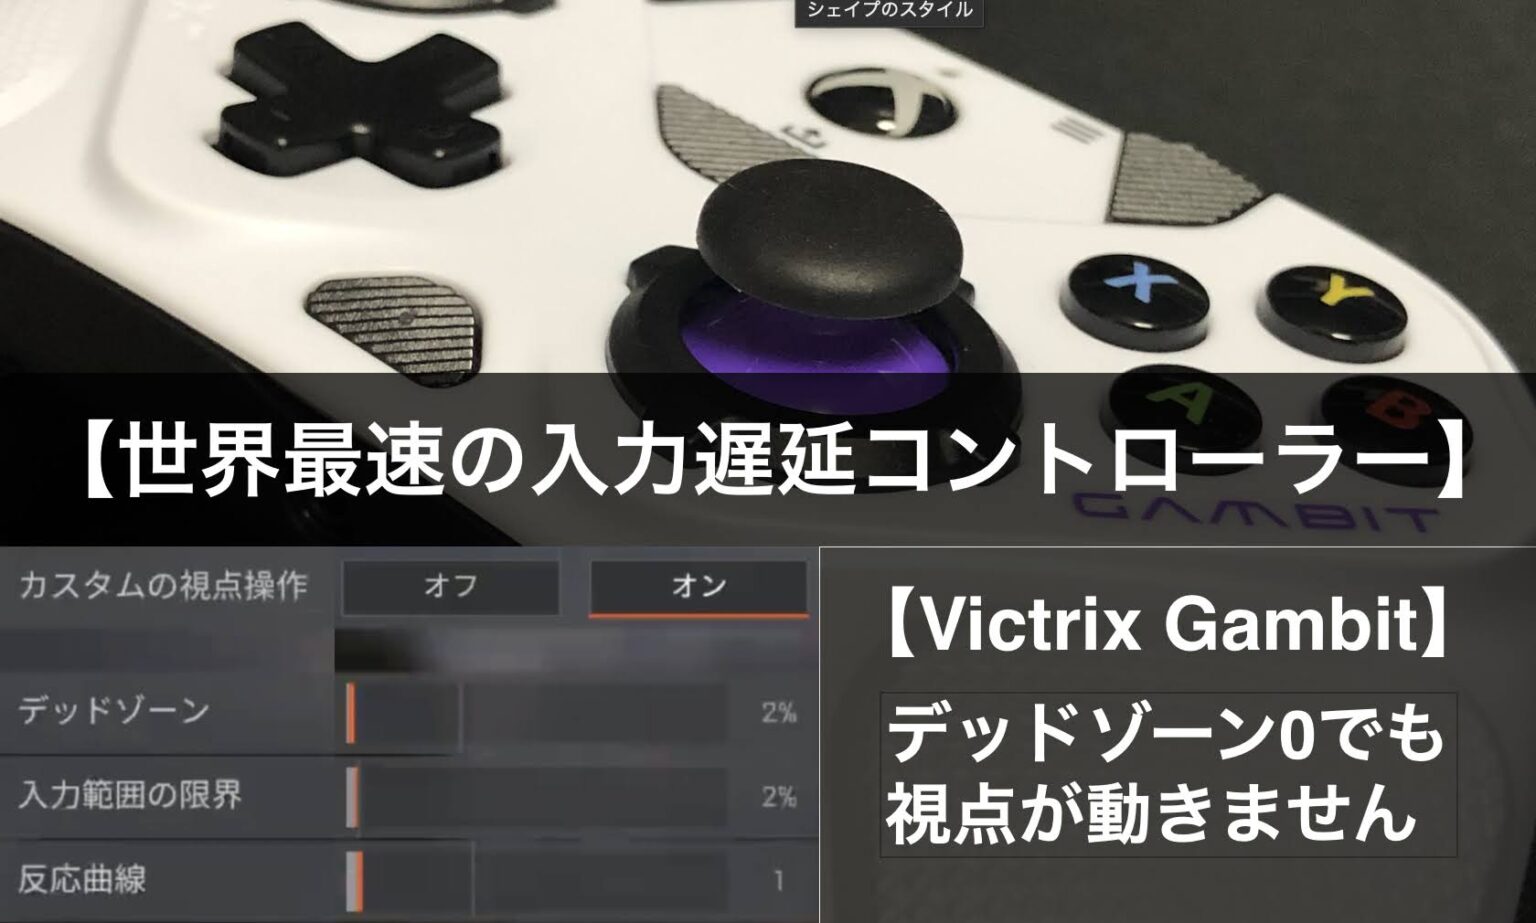 Victrix Gambit 世界最速のXboxコントローラー - ゲームソフト/ゲーム 